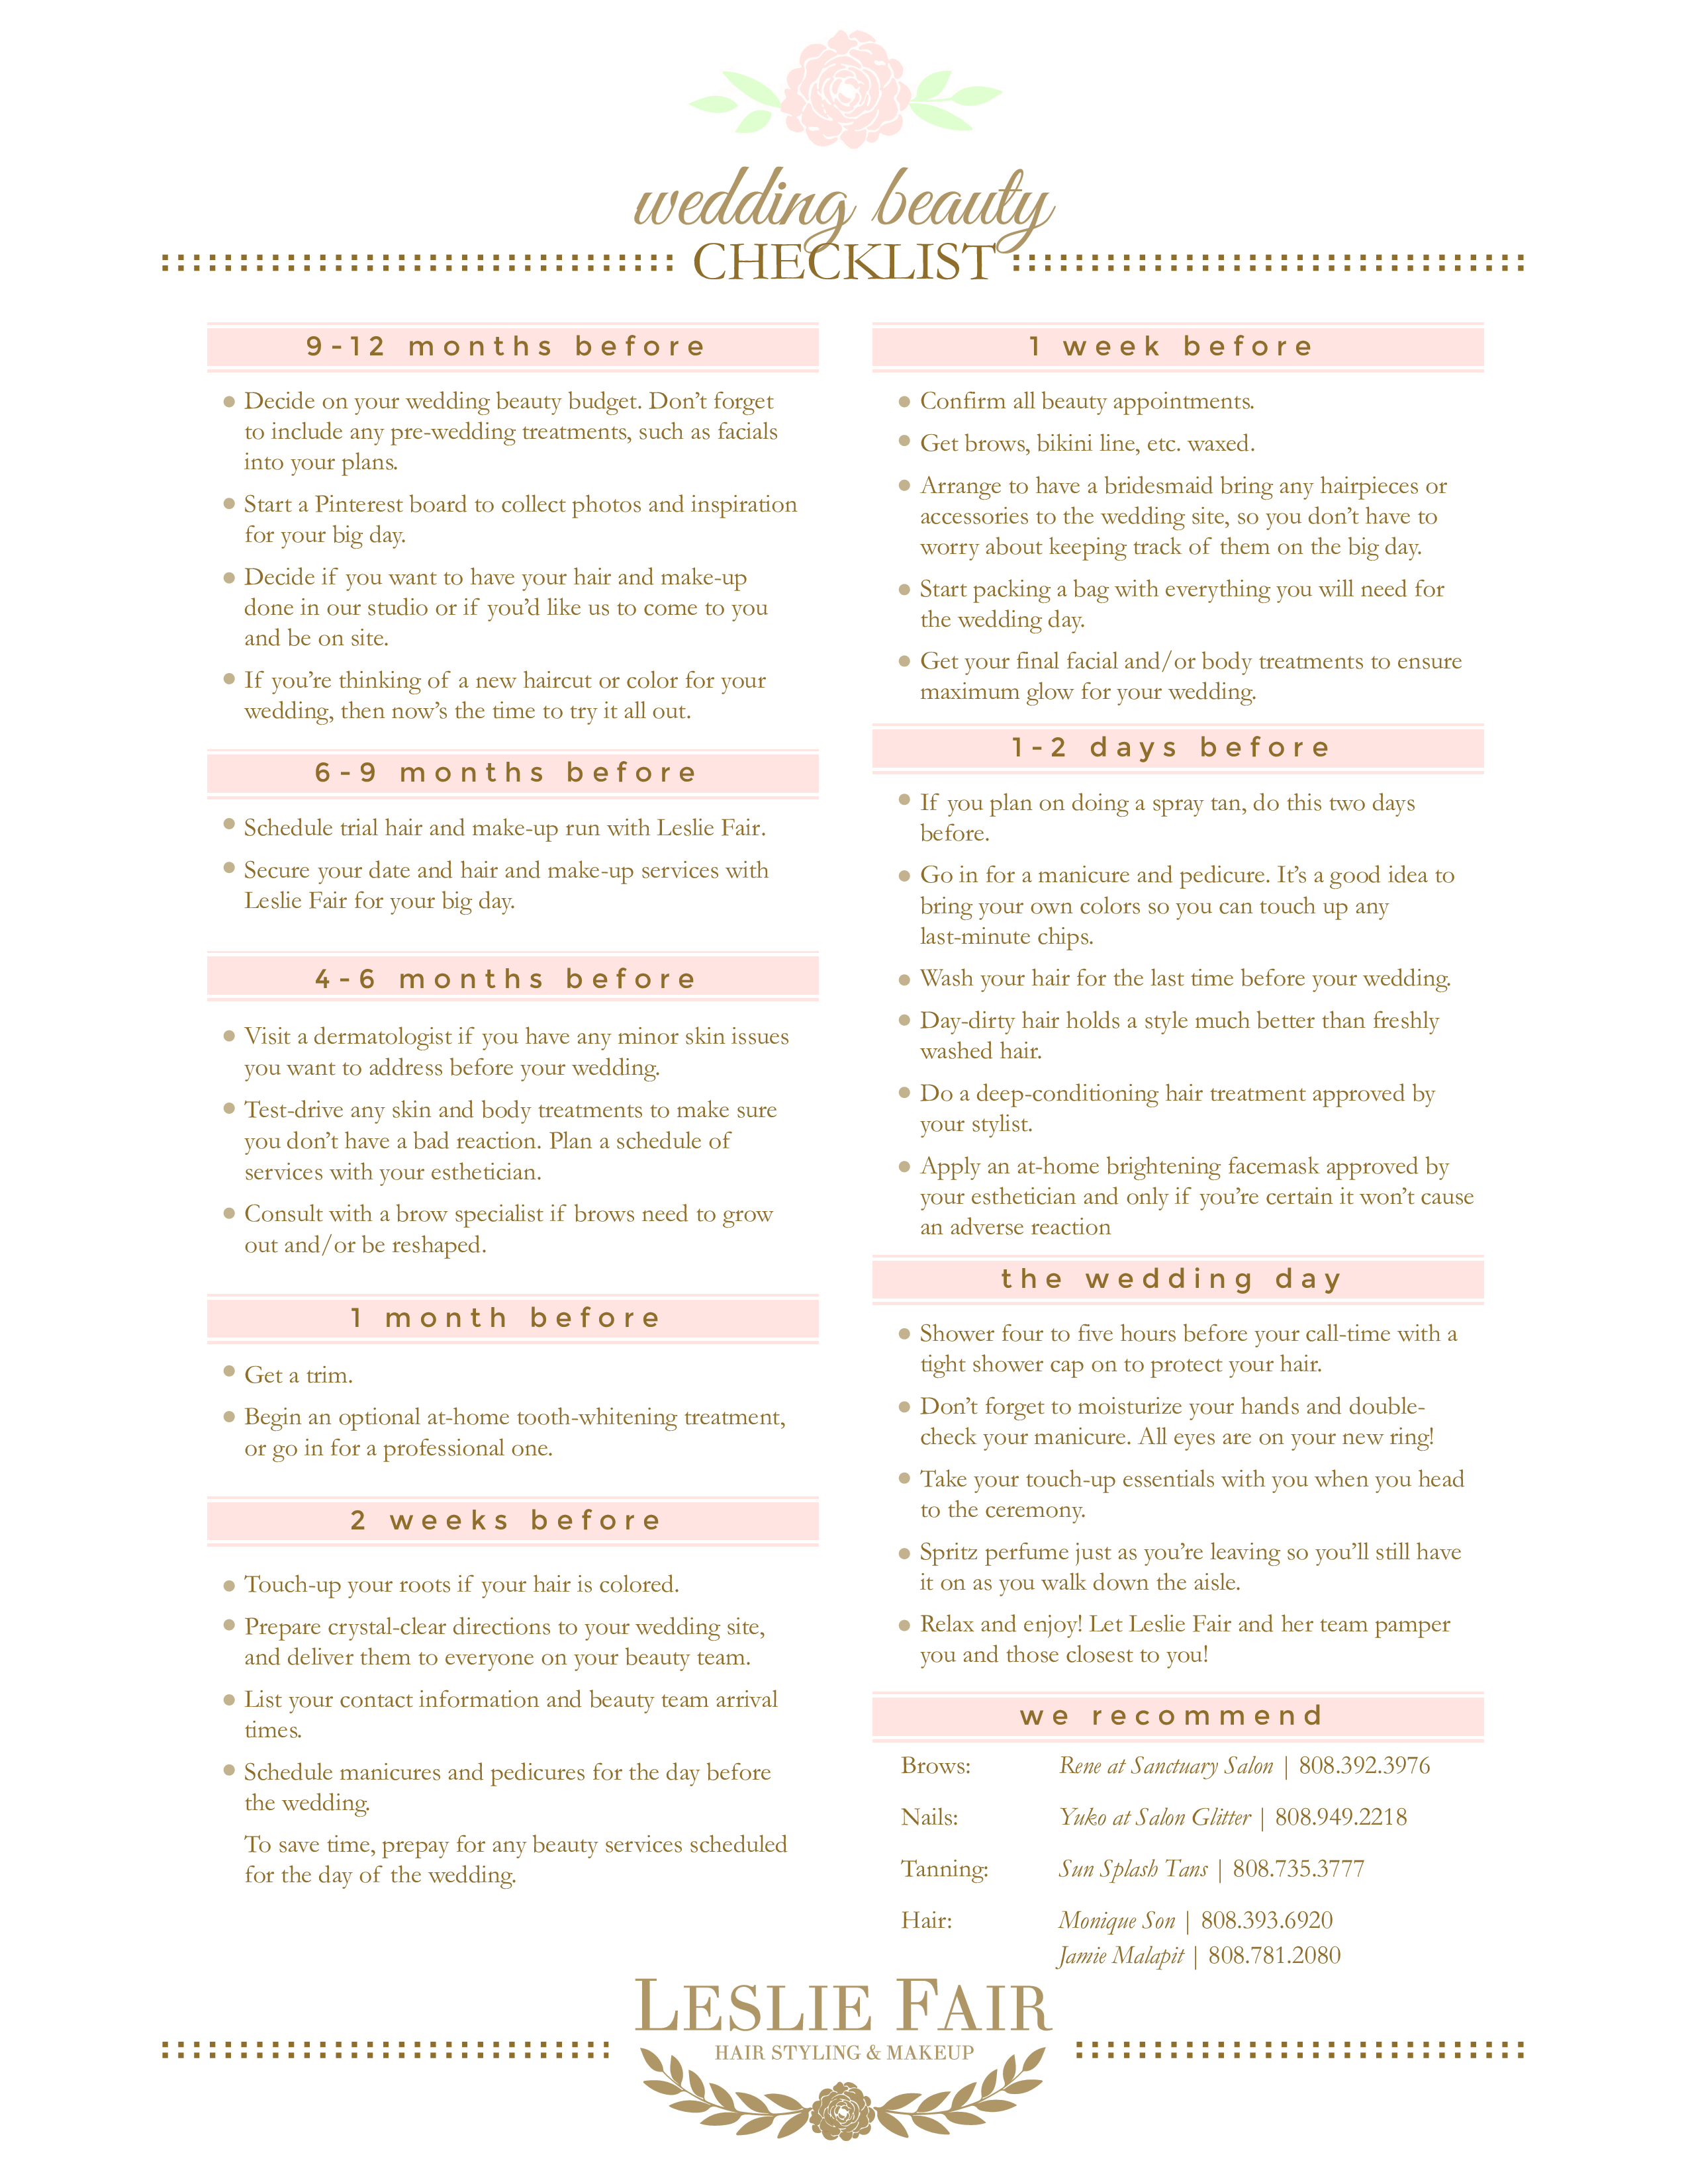 Printable Wedding Beauty Checklist main image